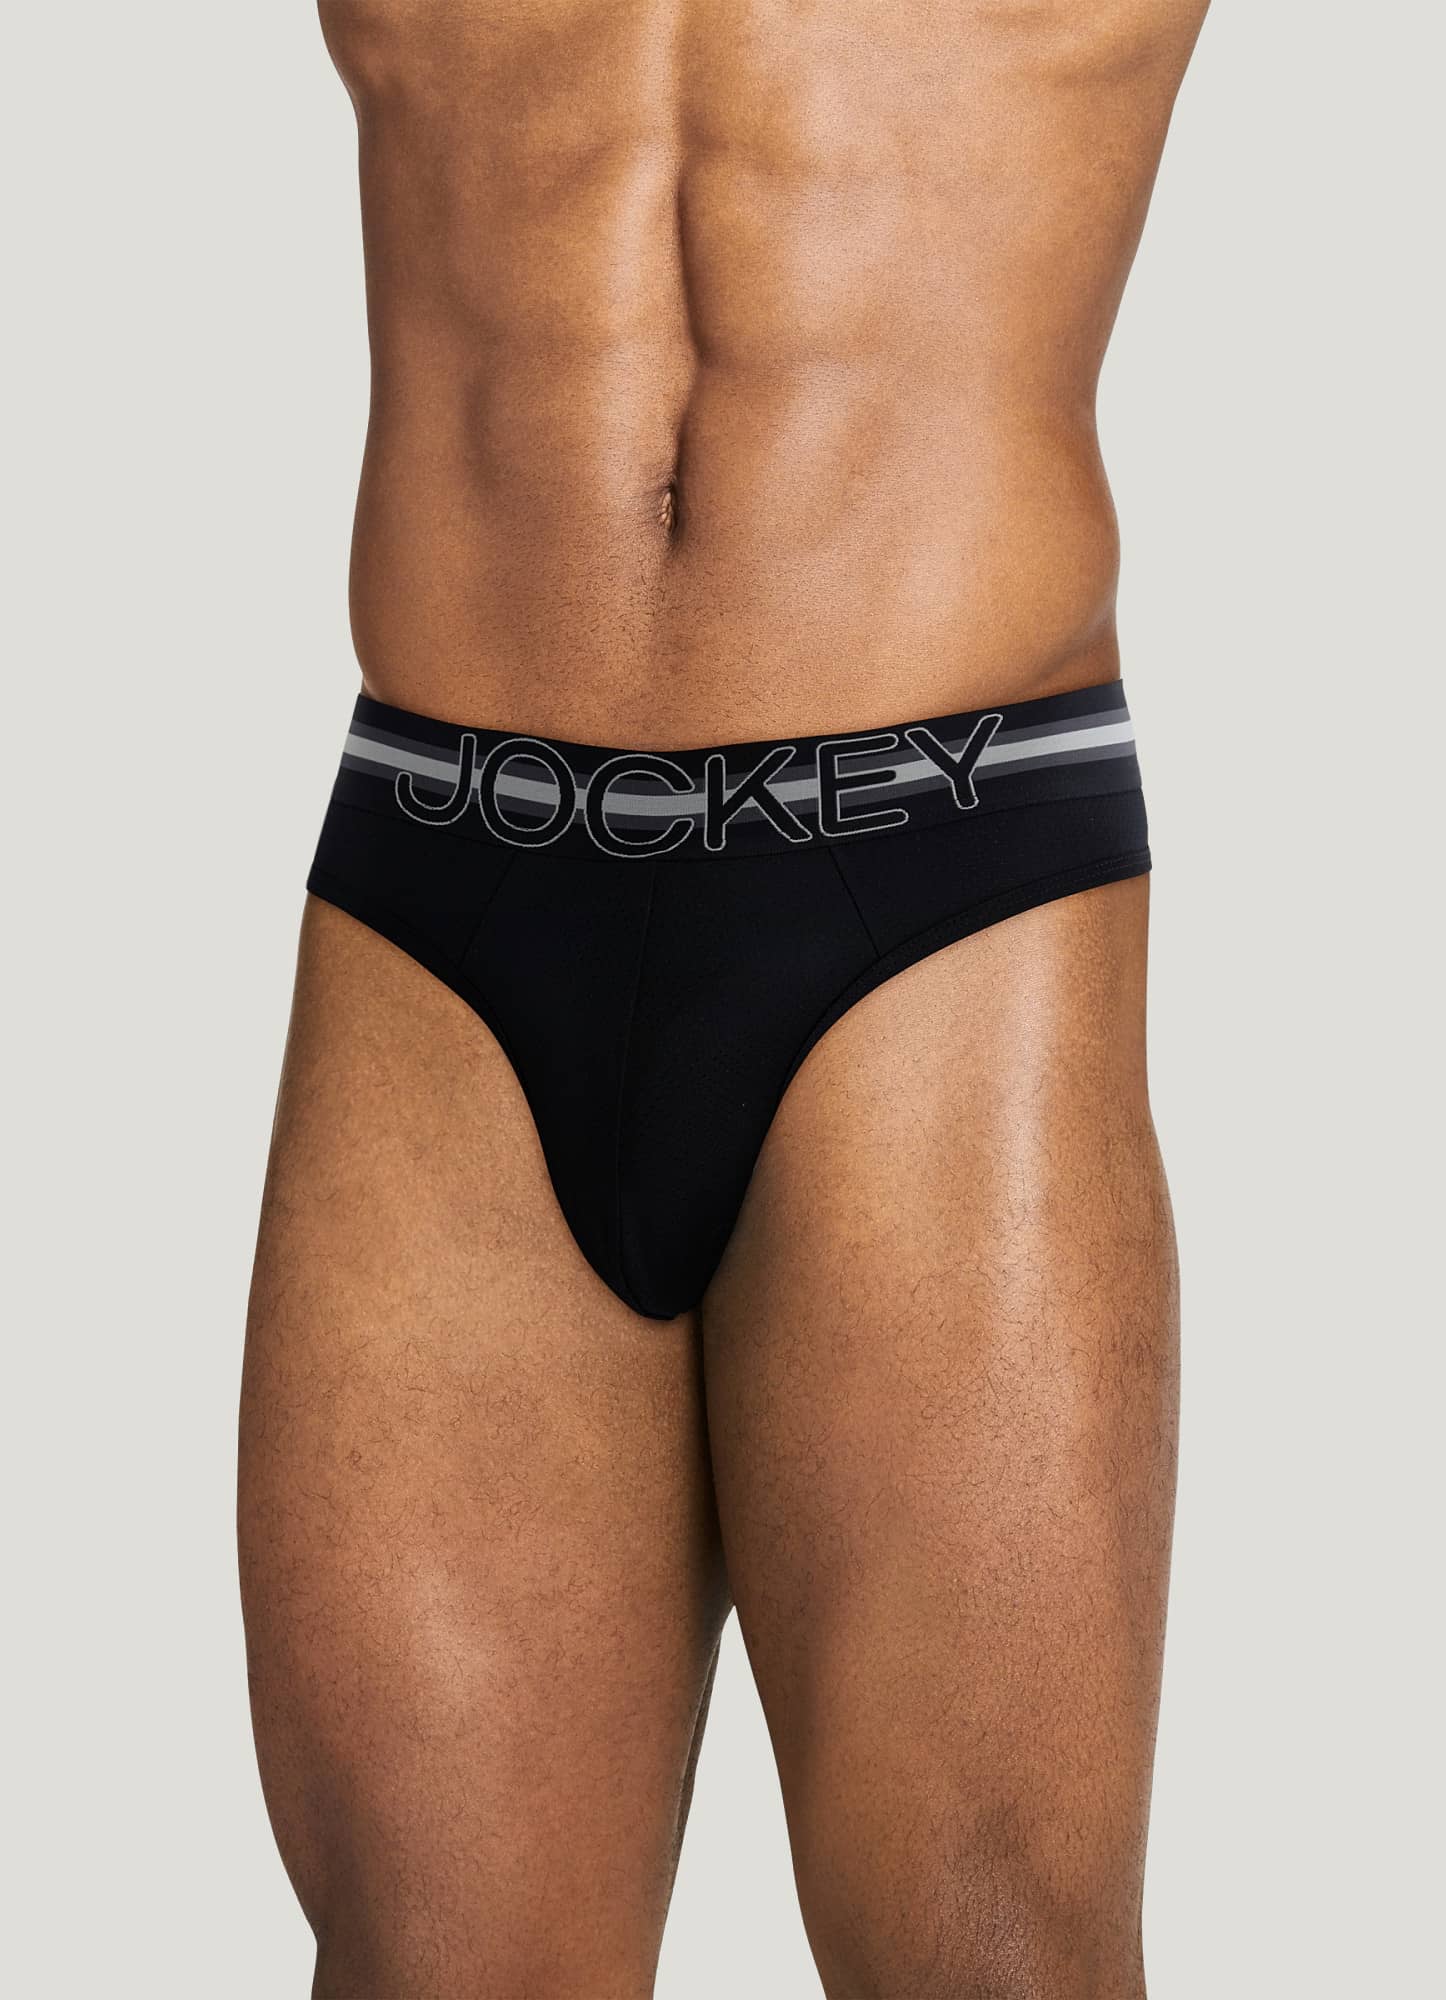 Jockey Men's Underwear Sport Stability Pouch Microfiber Brief